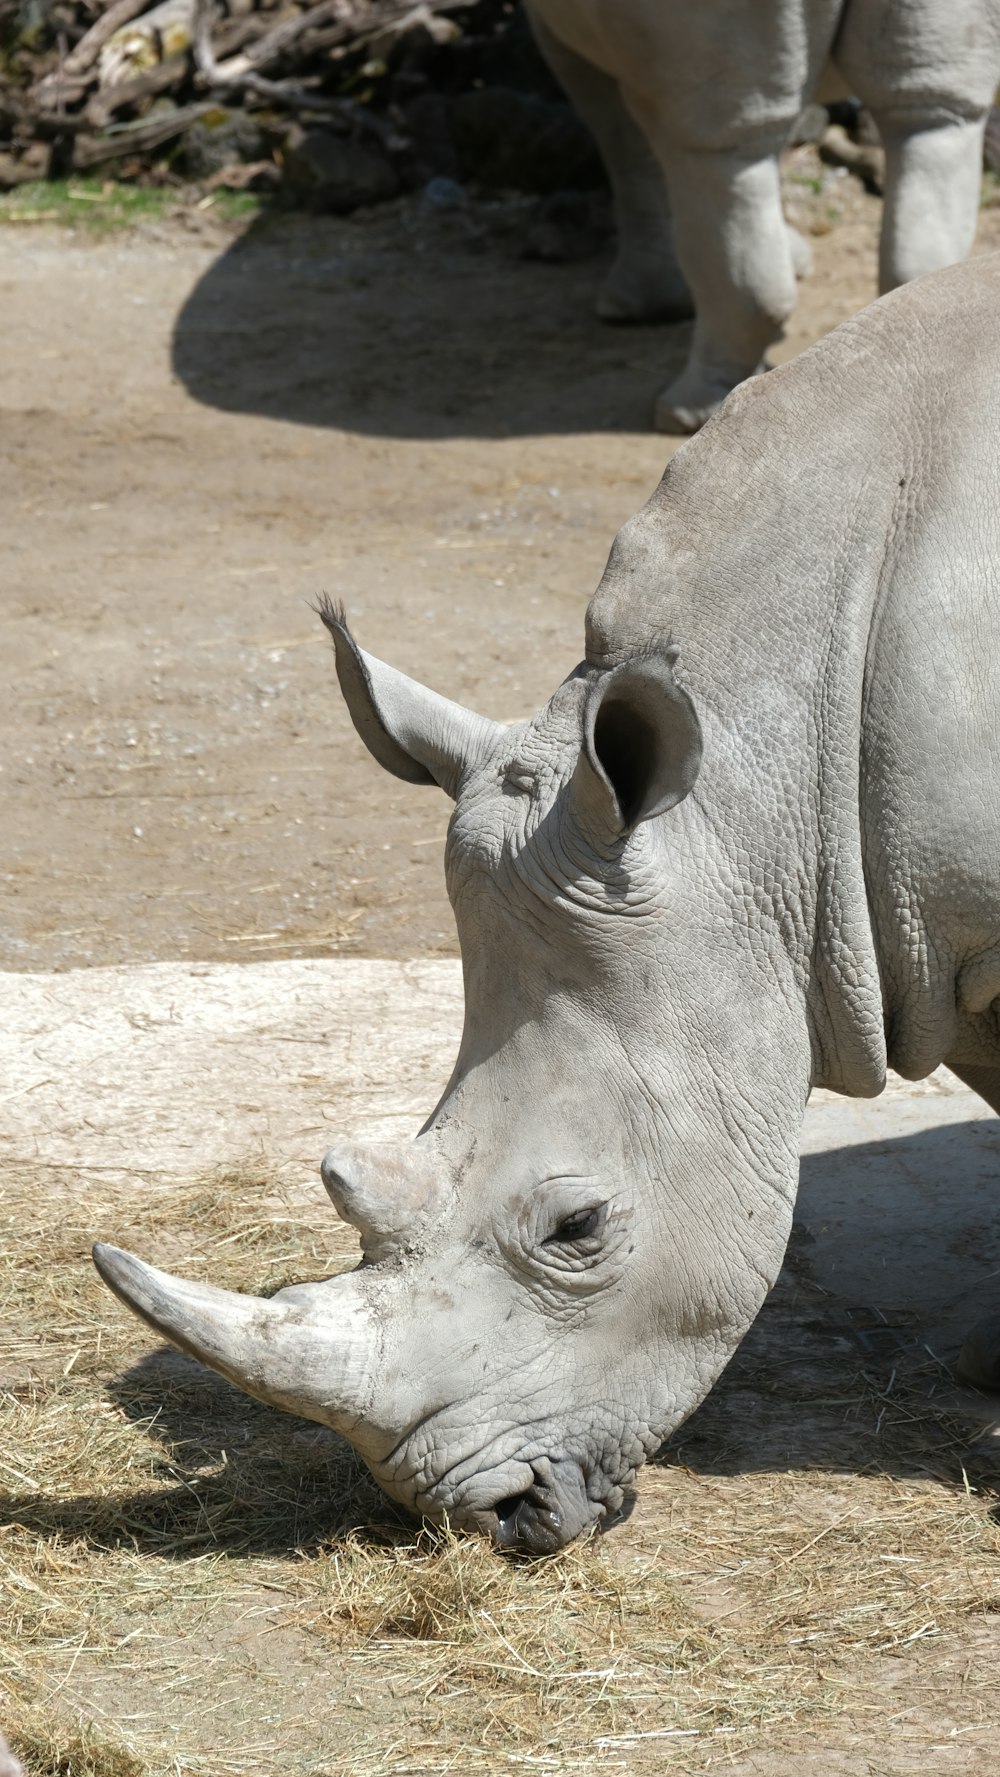 a rhinoceros eating hay in a zoo enclosure